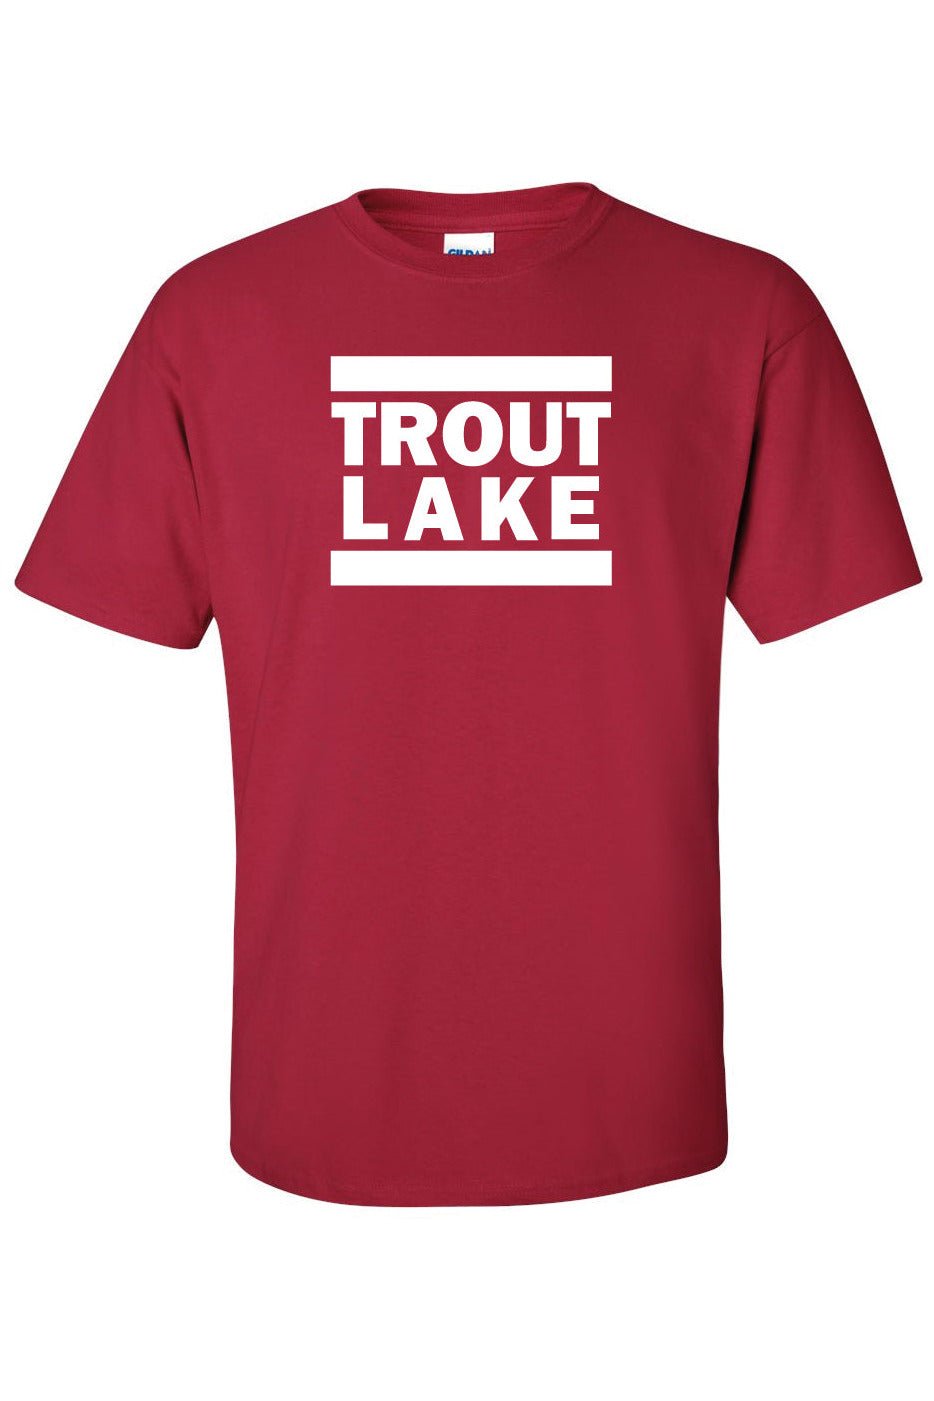 Trout Lake | Short Sleeve T-Shirt (Adult) - Oddball Workshop